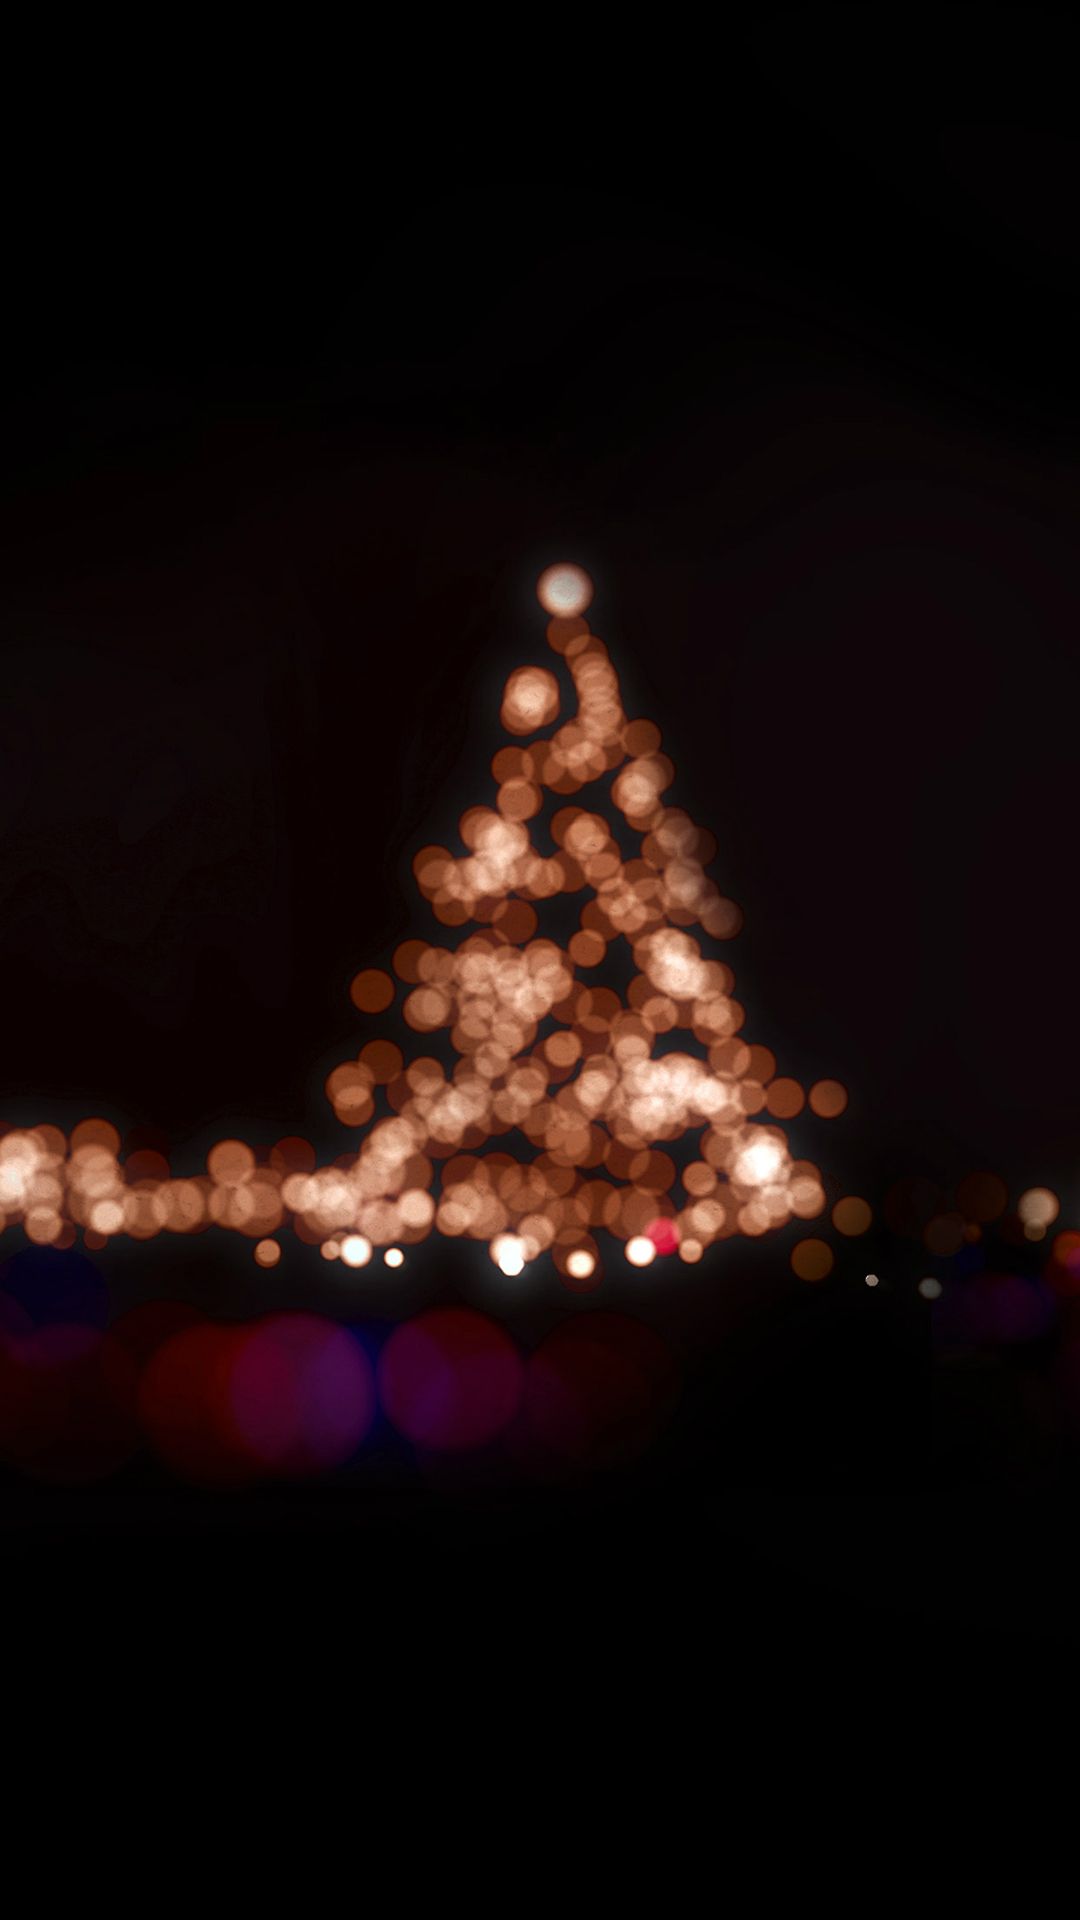 Christmas Lights Bokeh Love Dark Night iPhone 6 Wallpaper Download. iPhone Wallpap. Wallpaper iphone christmas, Wallpaper iphone neon, Christmas lights wallpaper